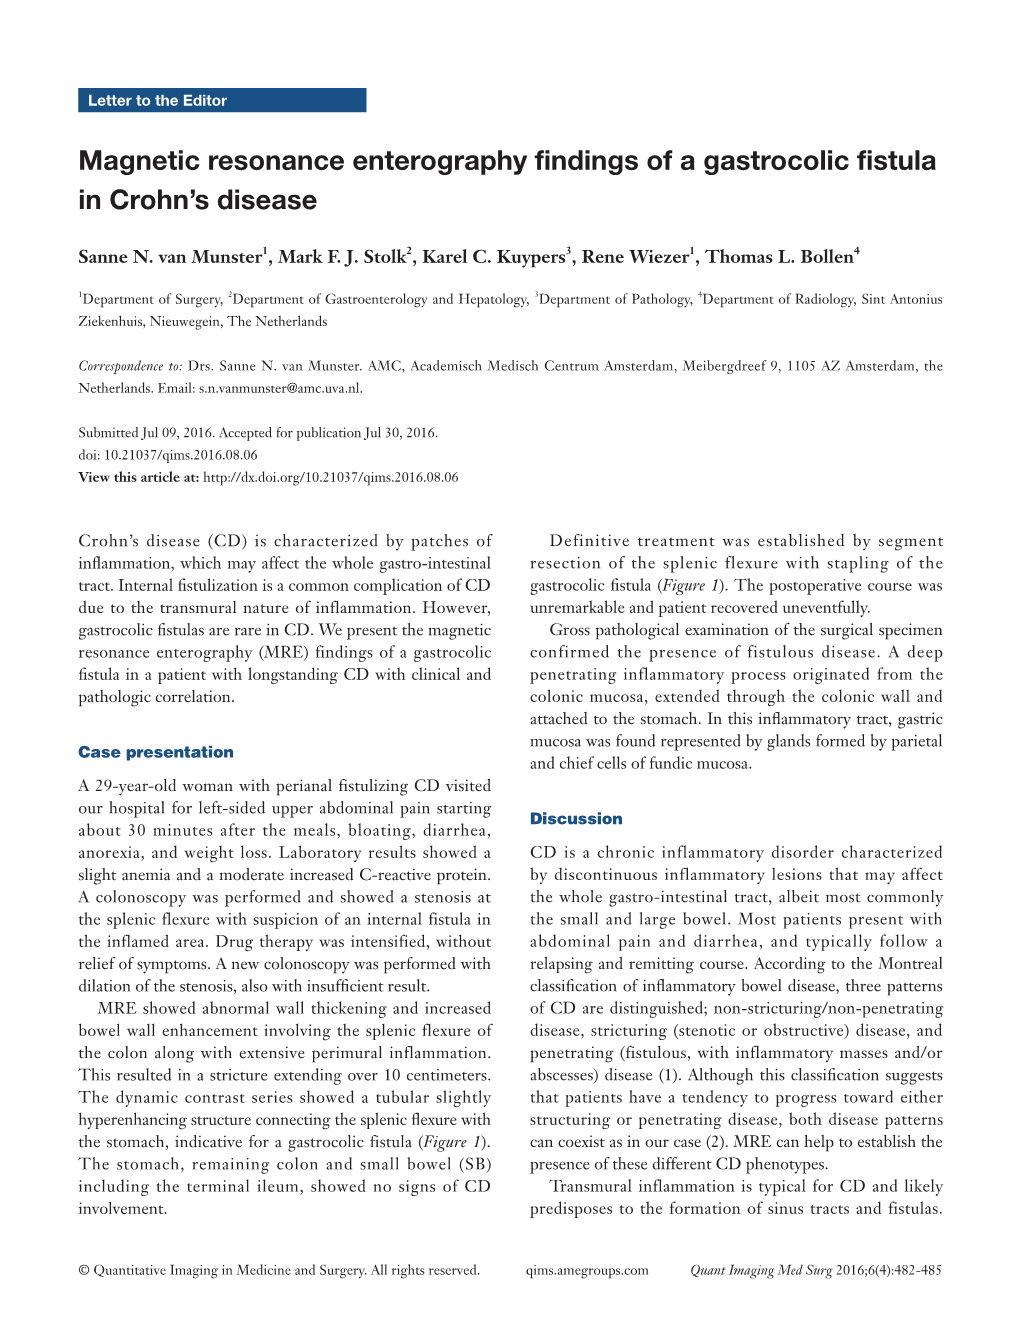 Magnetic Resonance Enterography Findings of a Gastrocolic Fistula in Crohn’S Disease